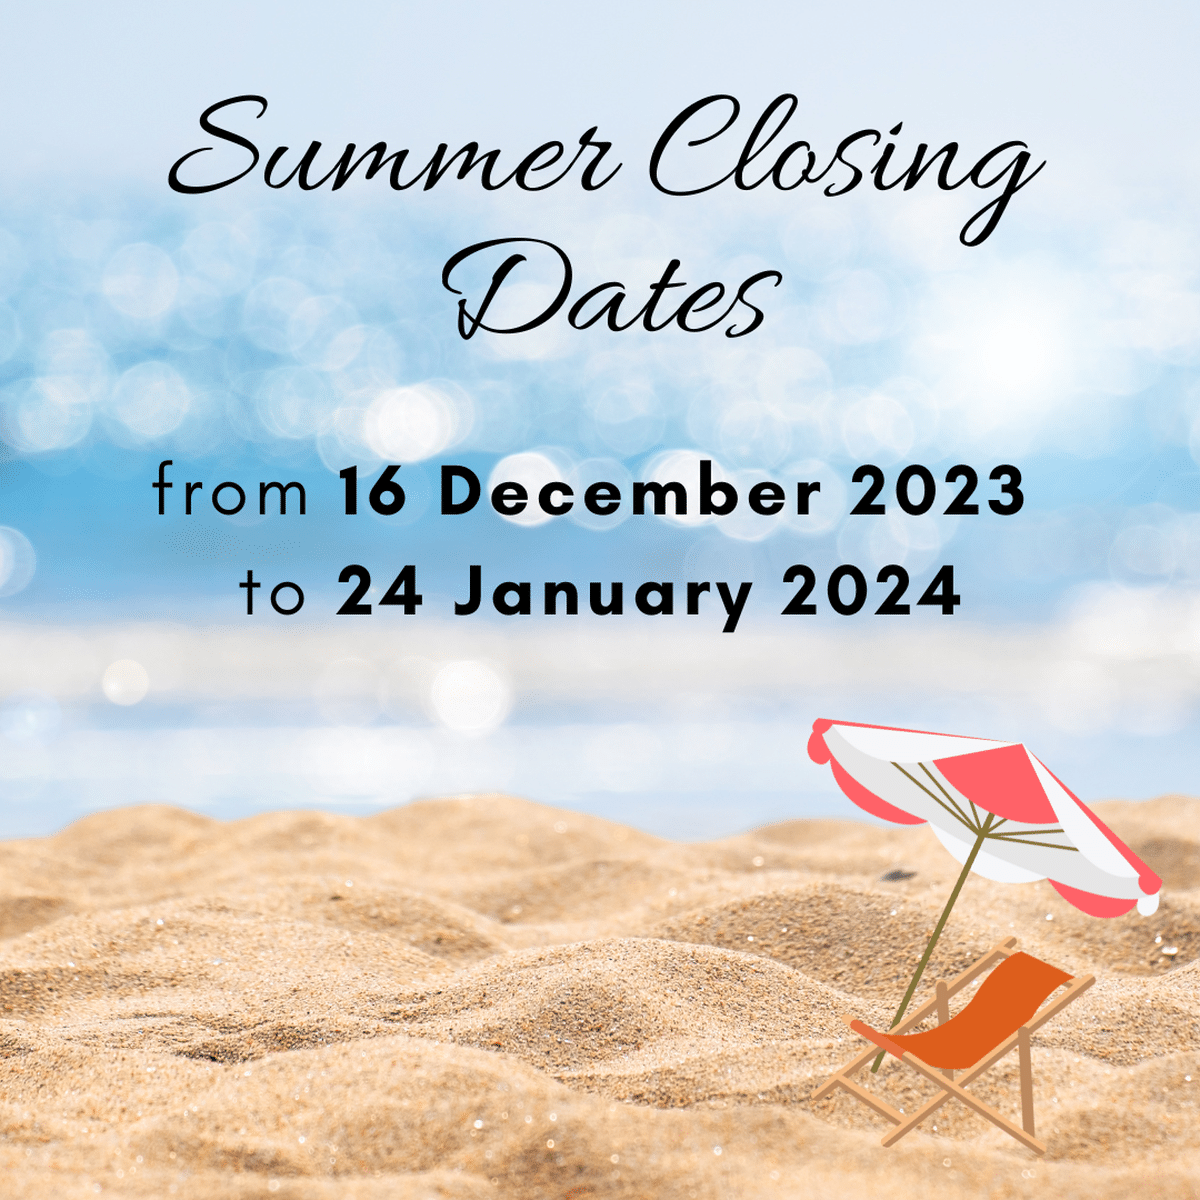 Summer Closing Dates